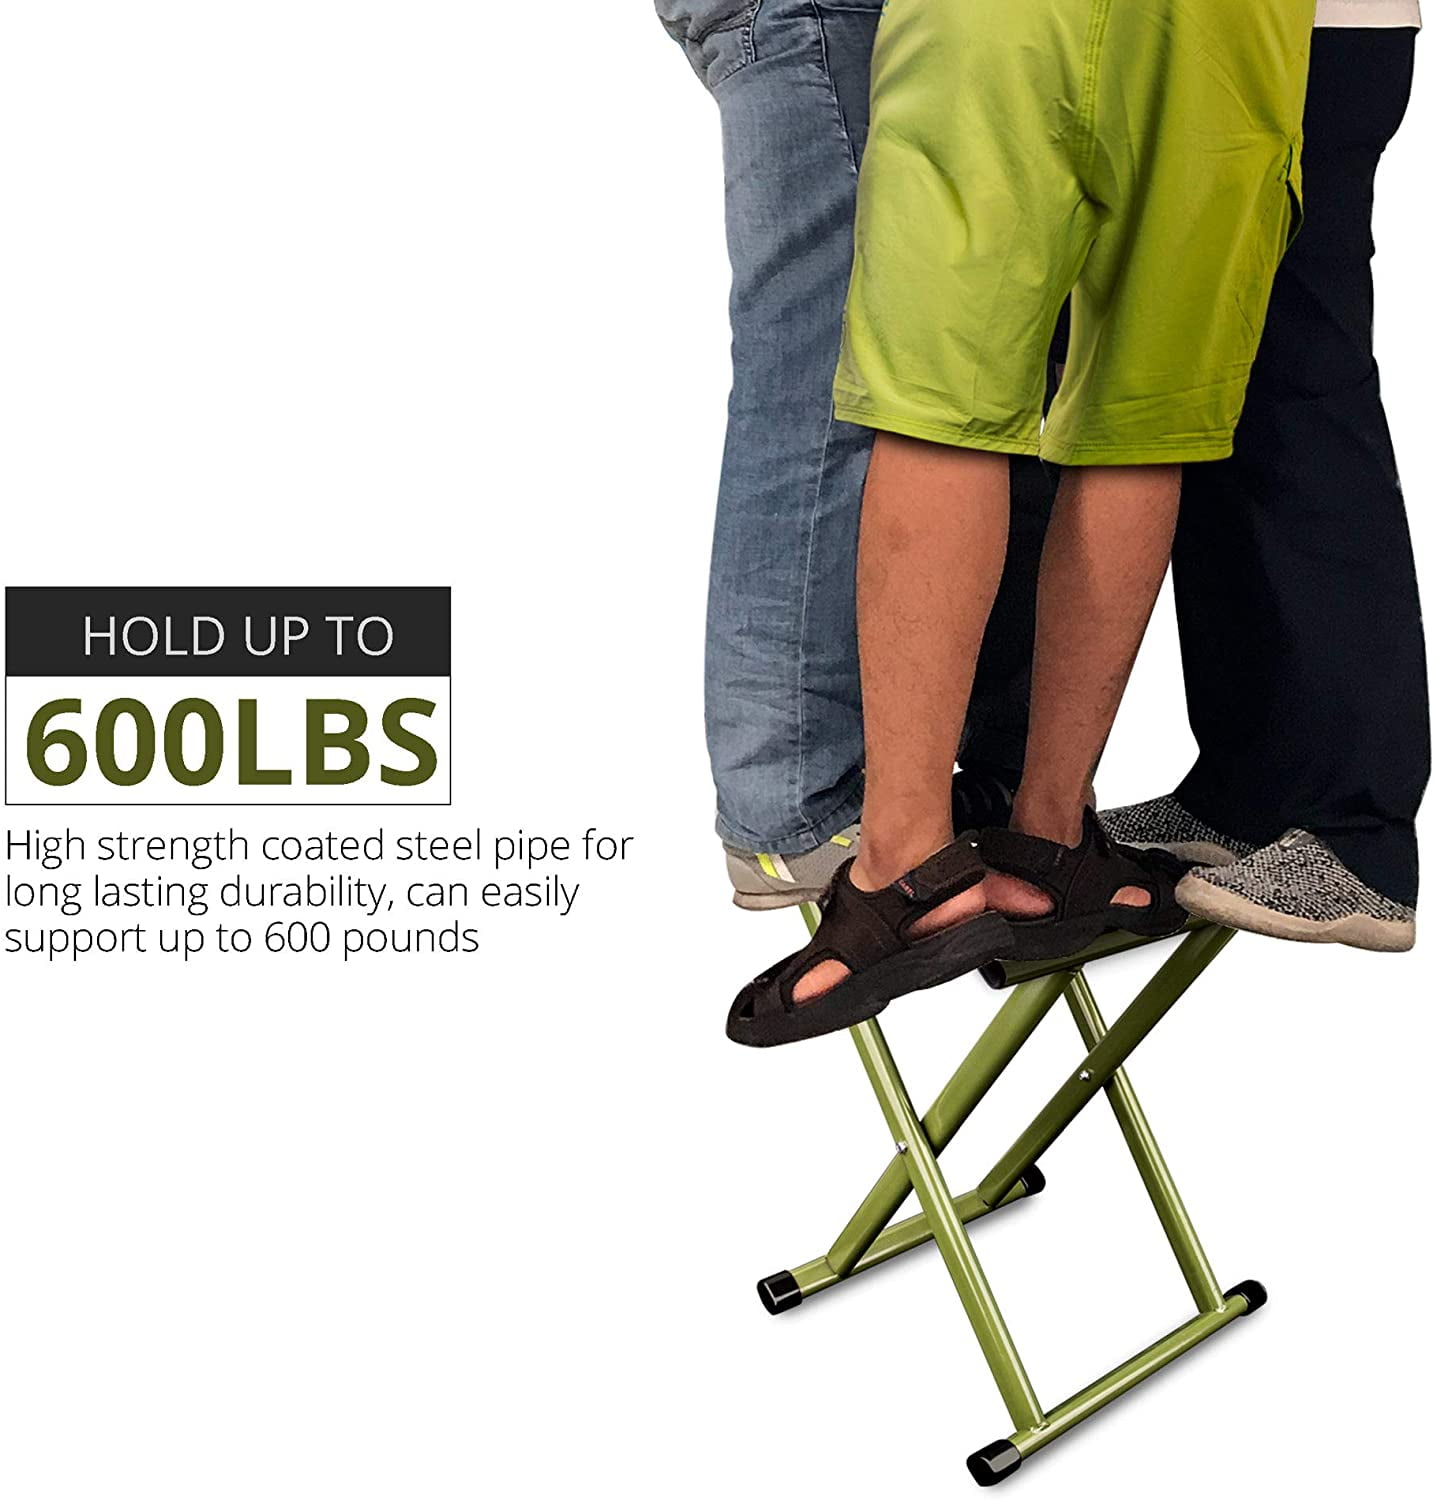 triple tree portable folding stool